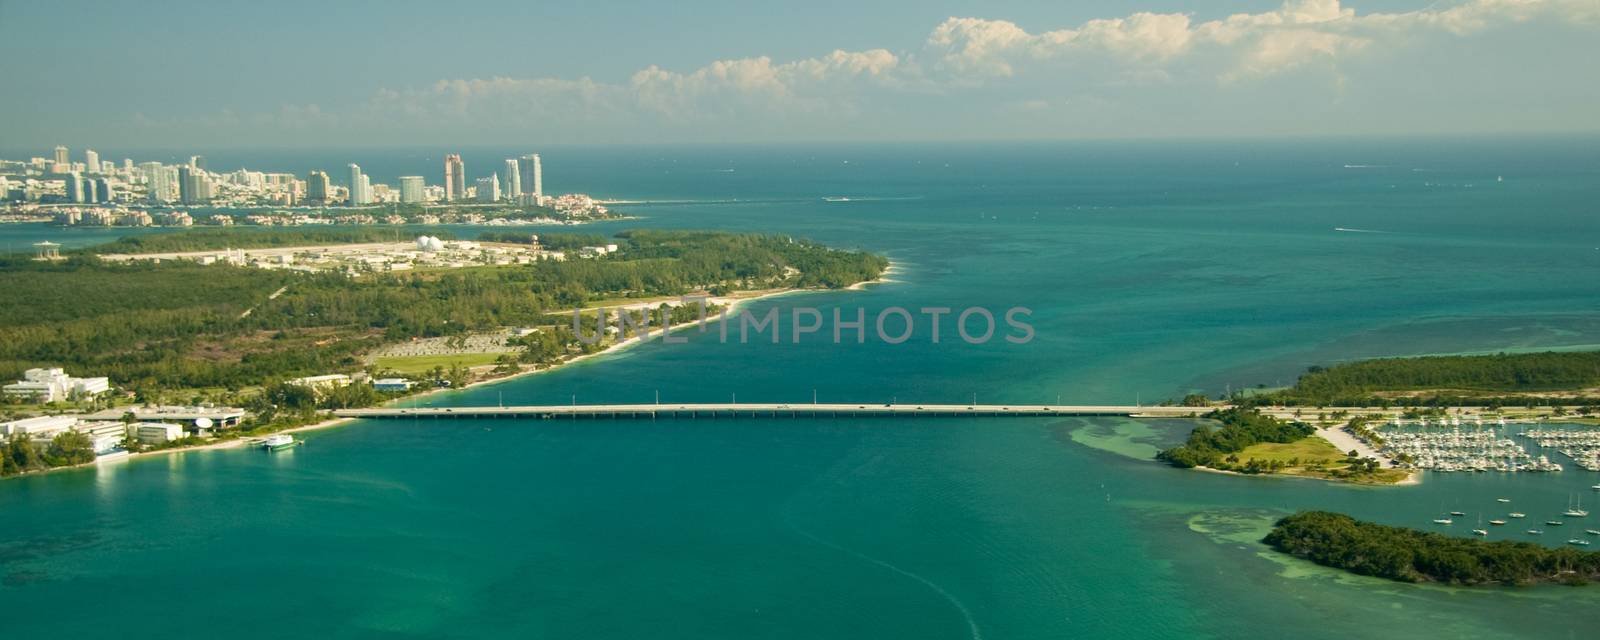 Aerial view of a bridge over the Atlantic Ocean, Miami, Florida, USA